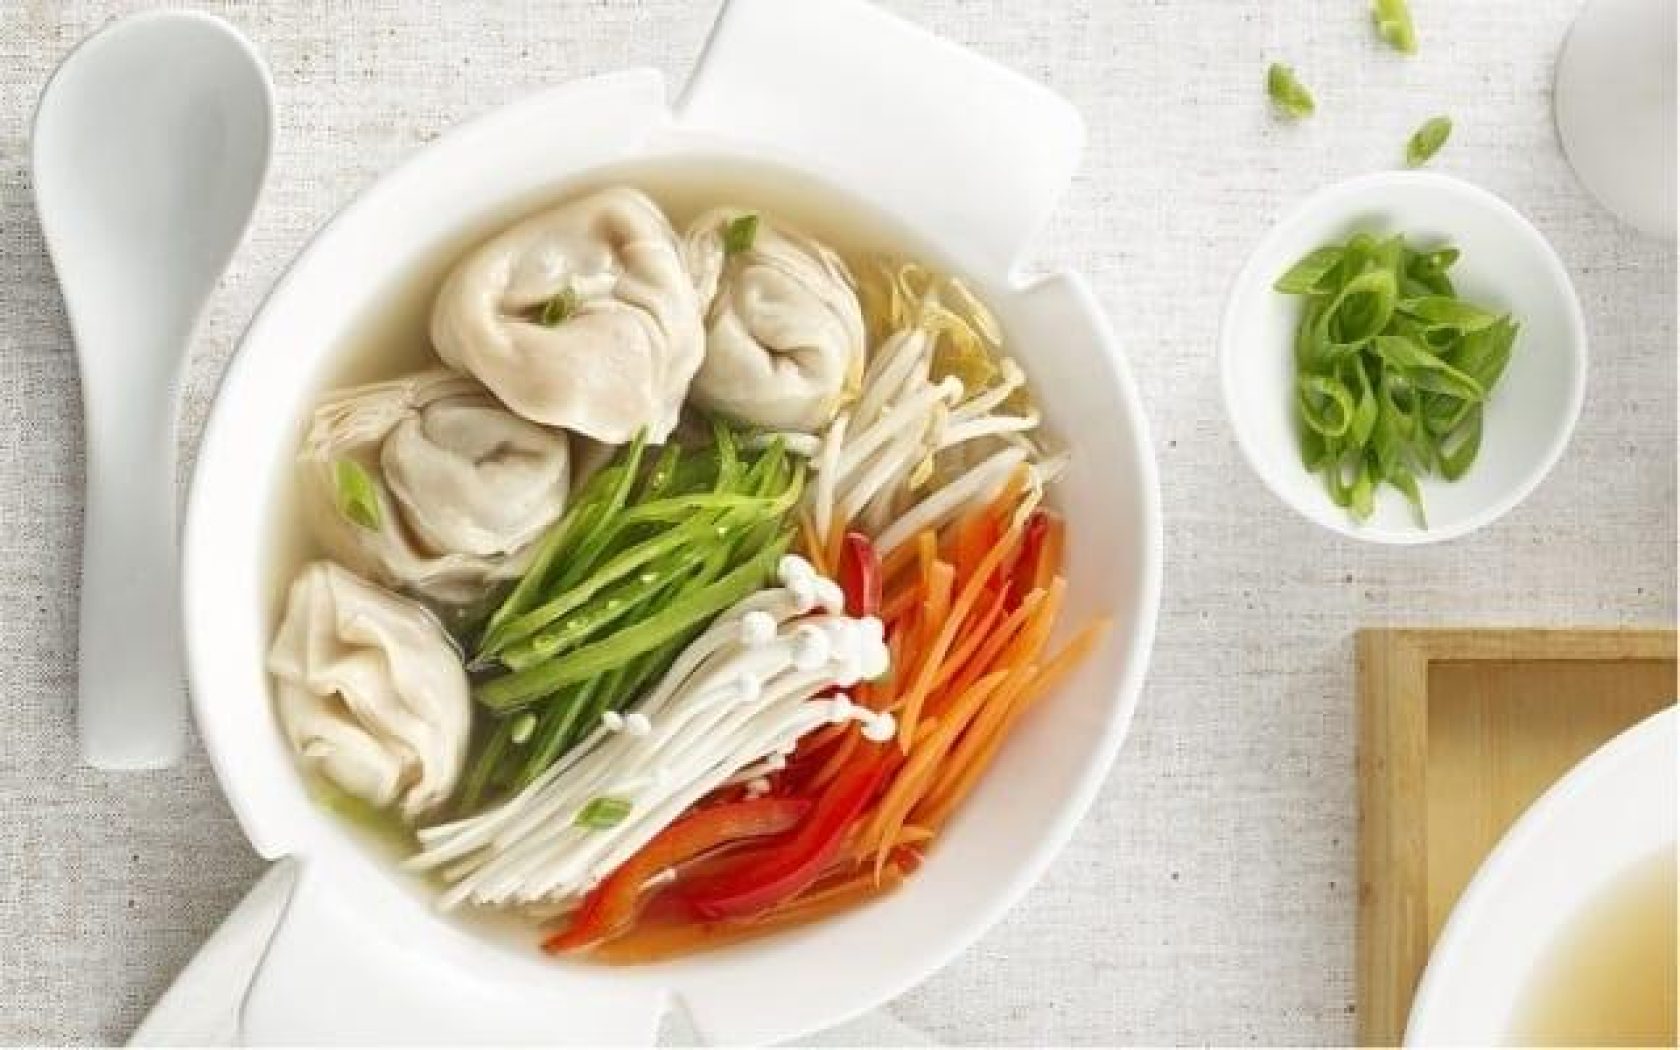 Gourmet wonton soup with Asian noodles